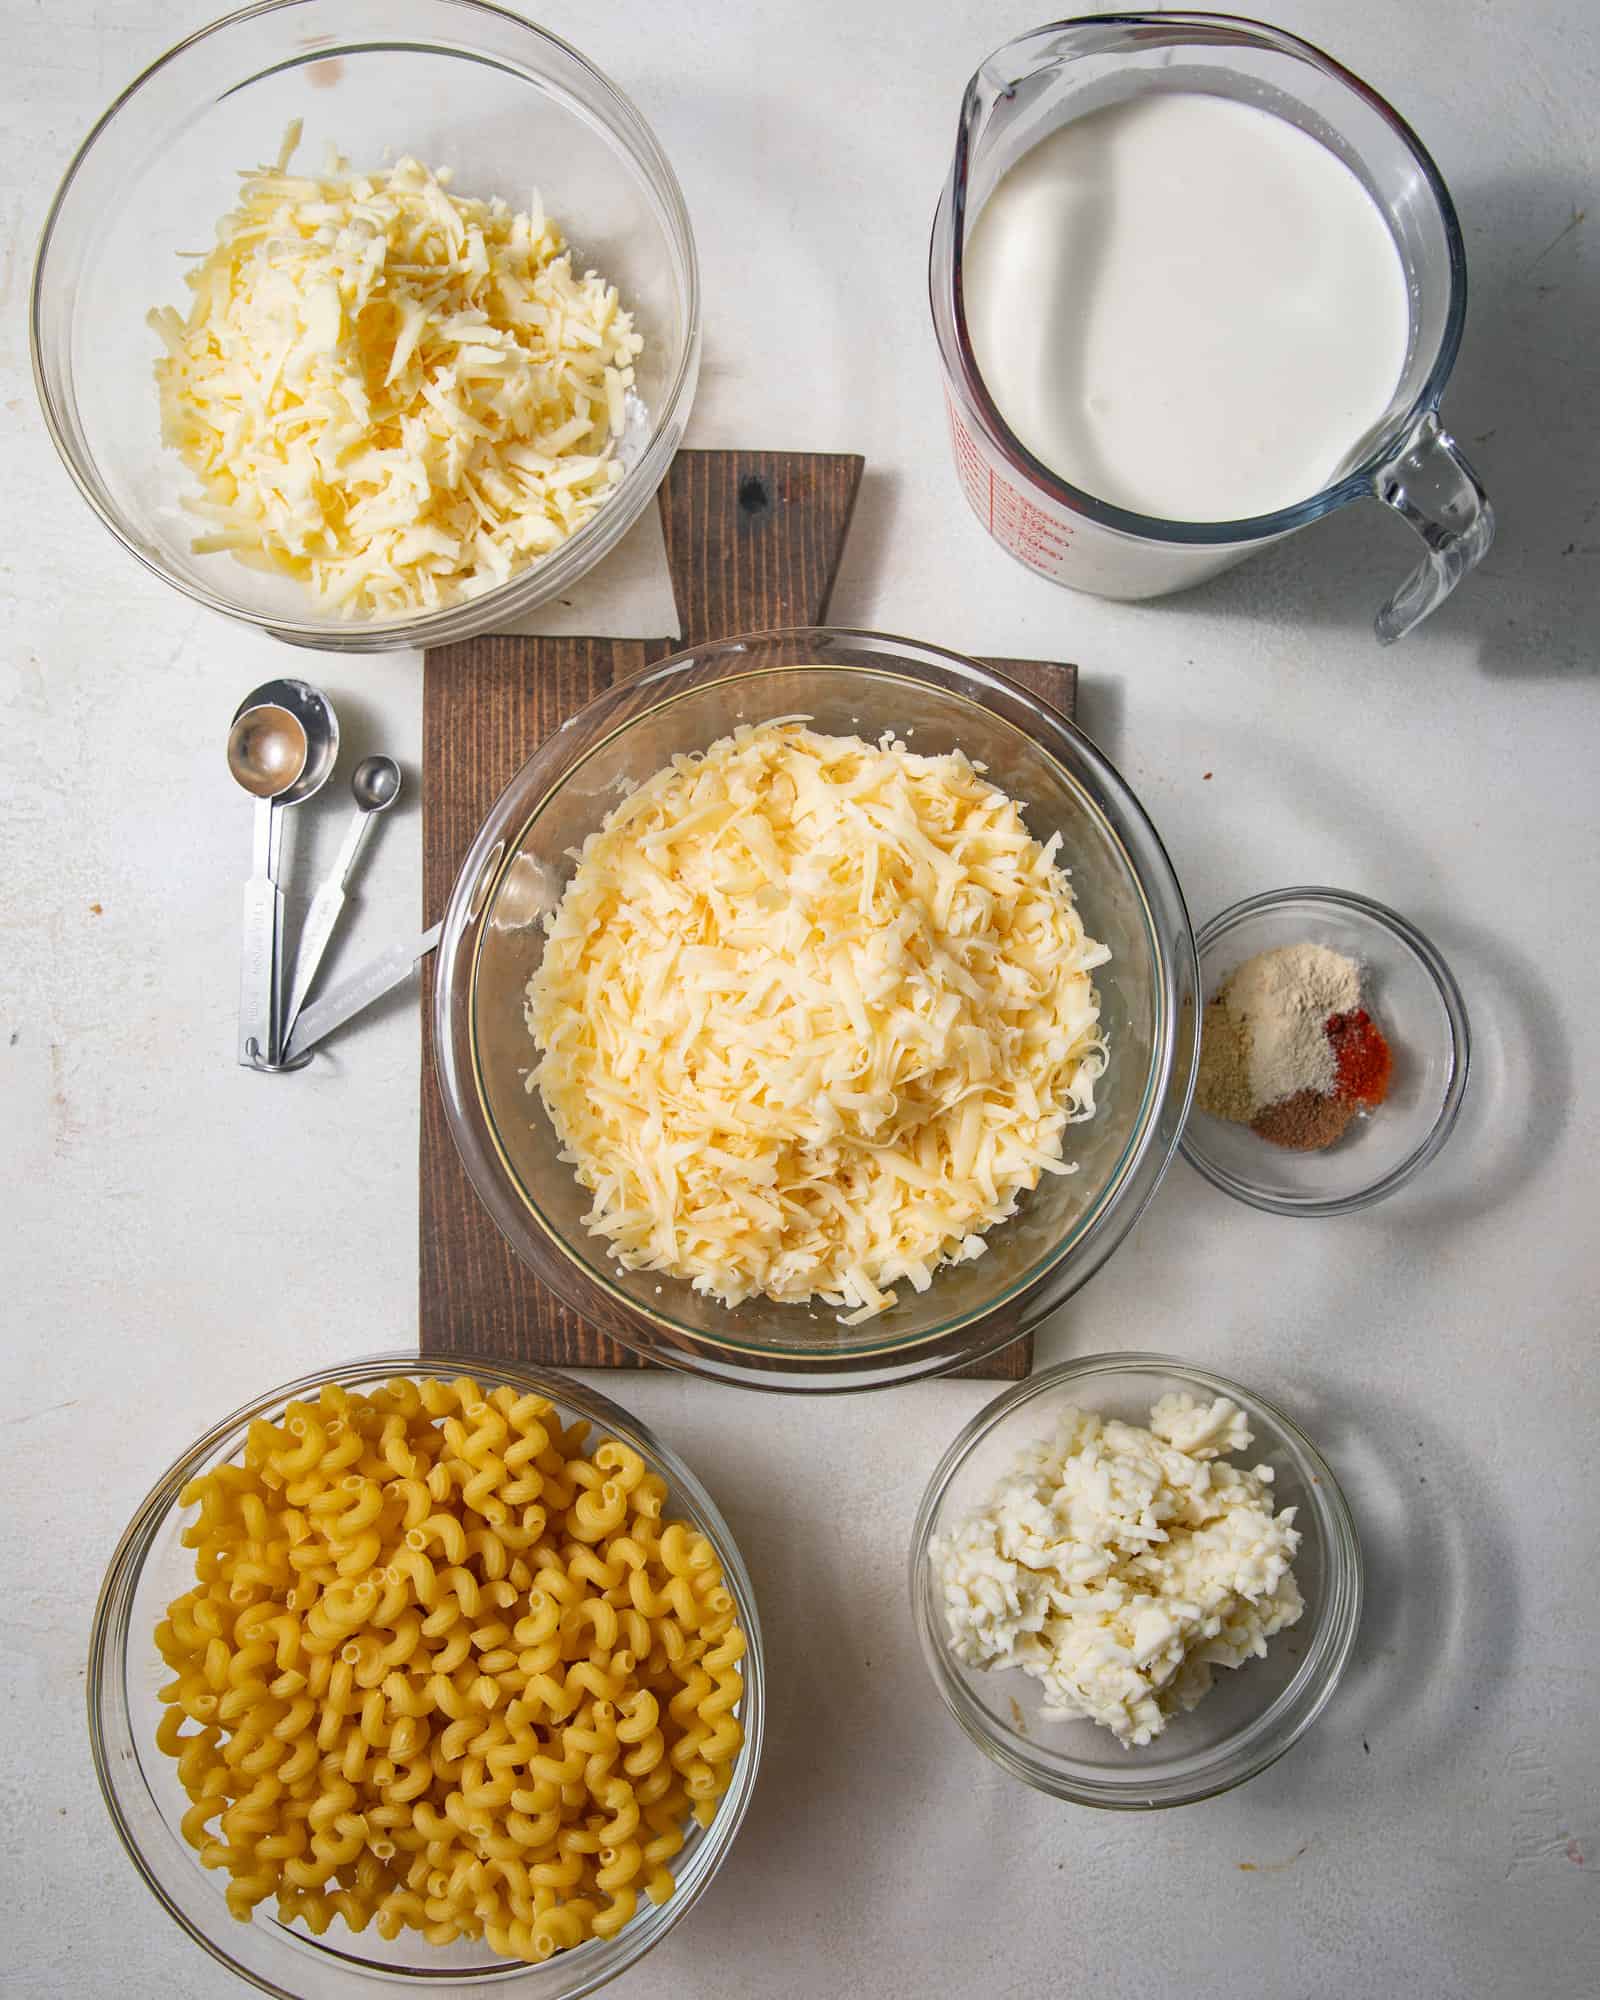 ingredients to make smoked gouda mac and cheese - heavy cream, milk, spices, mozzarella, cheddar, smoked gouda, flour, and pasta.